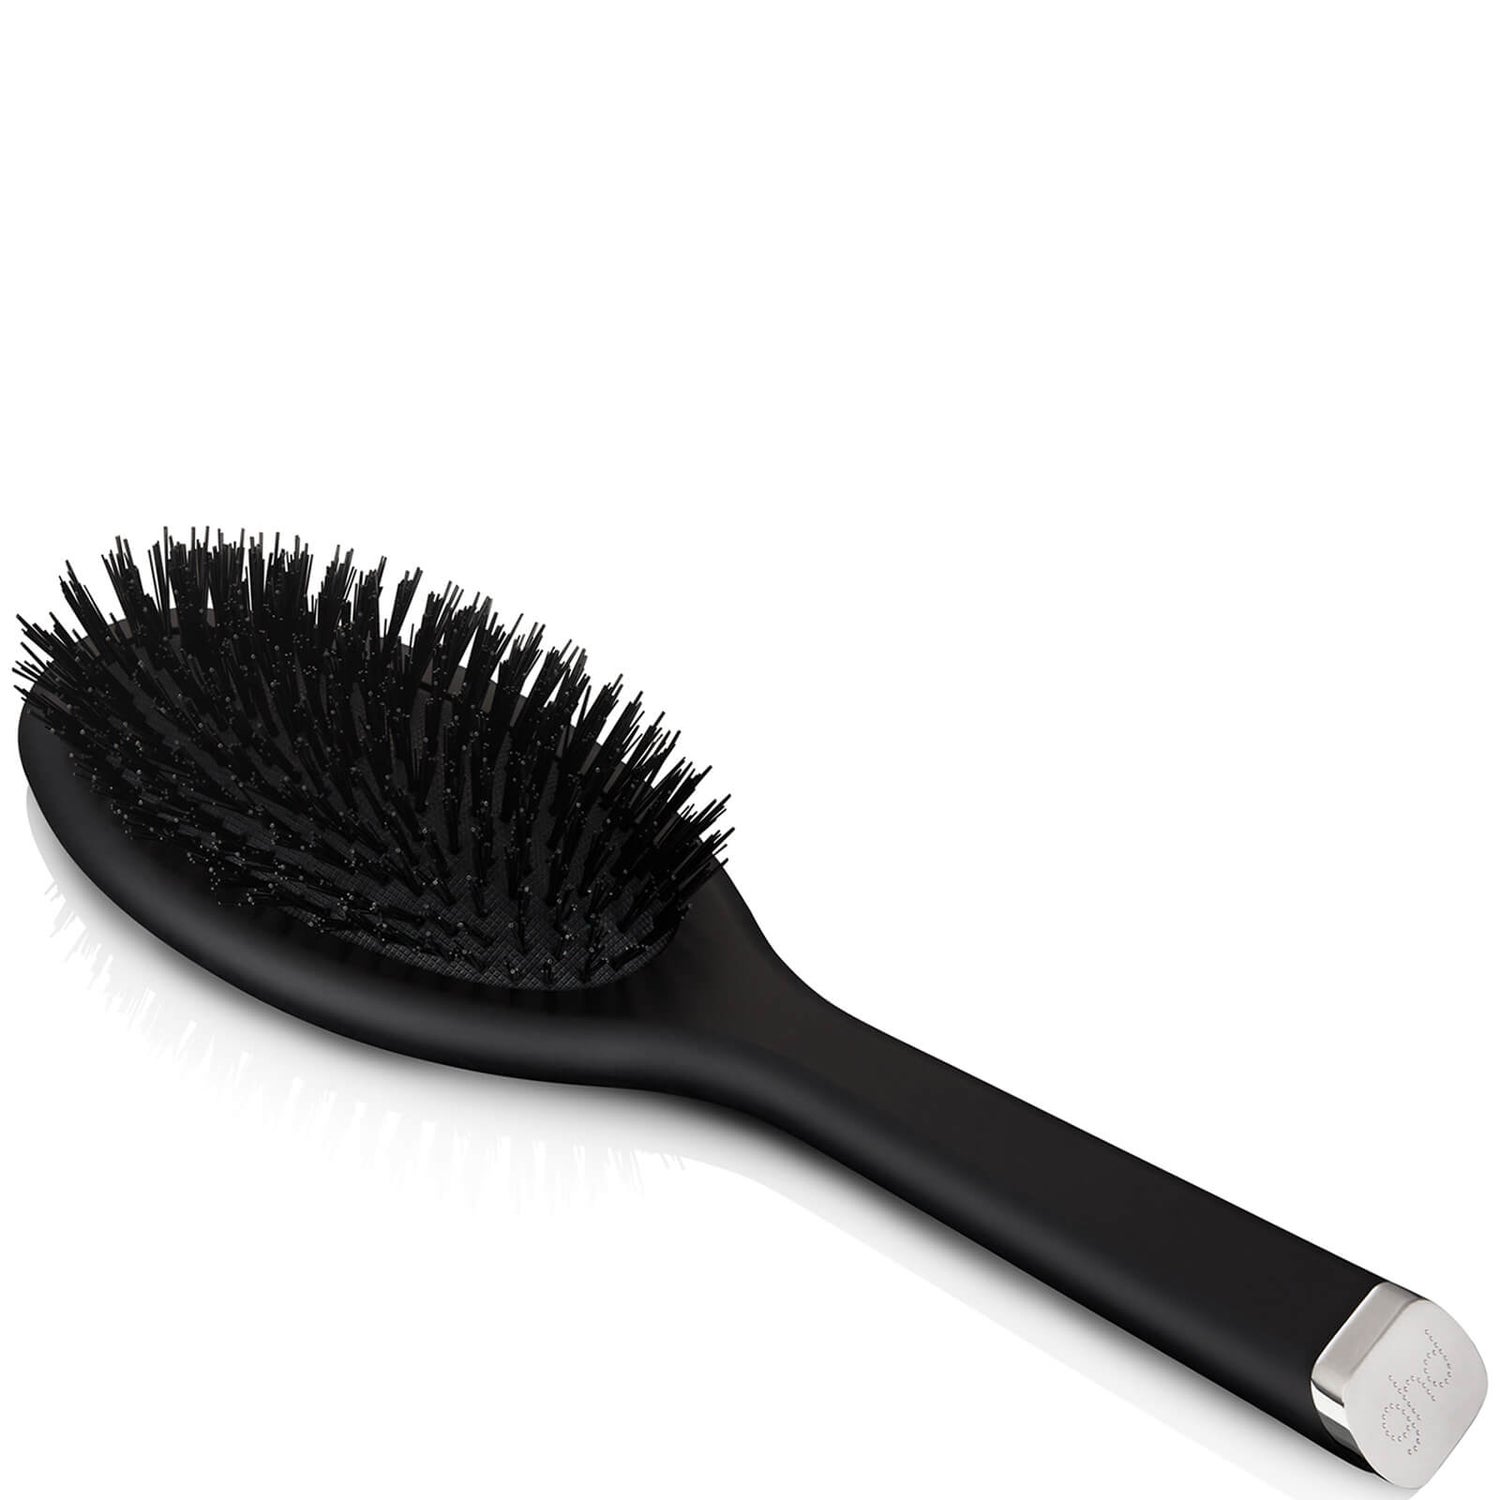 ghd The Dresser Oval Hair Brush